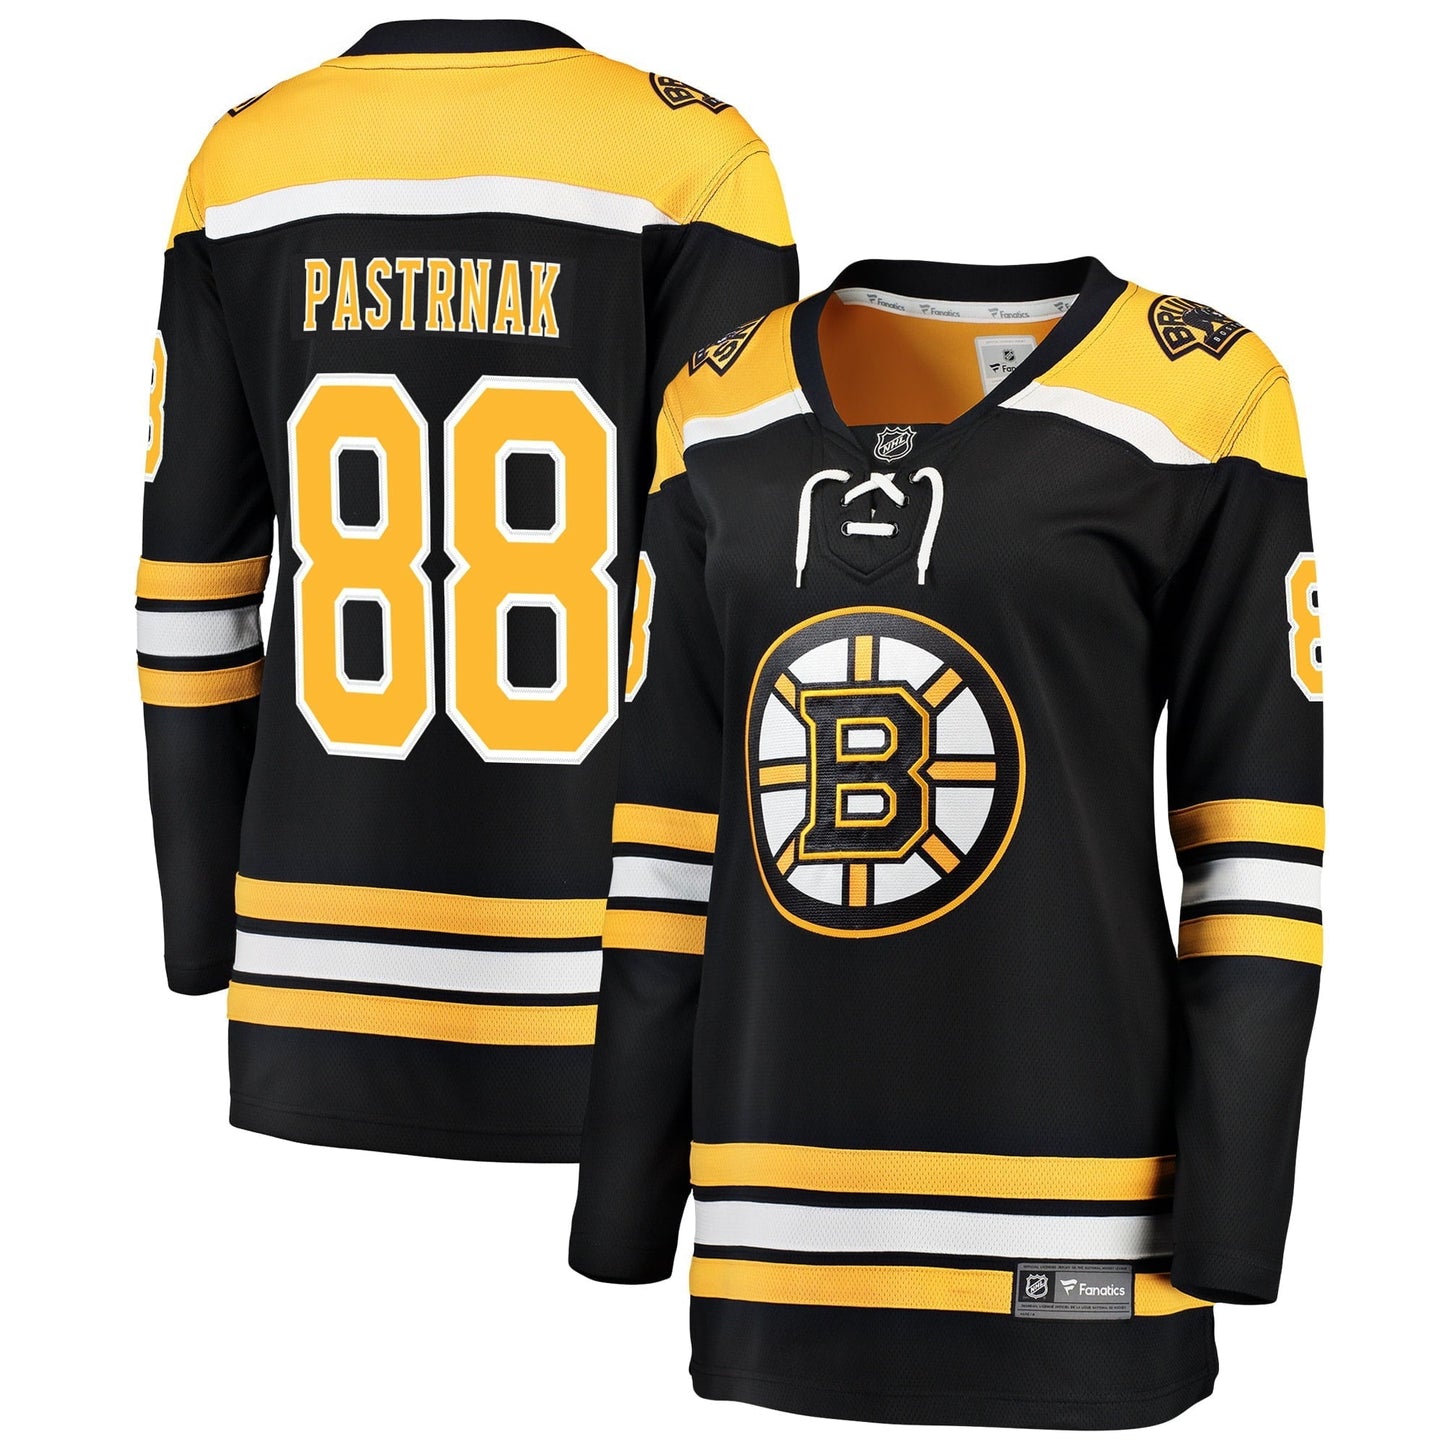 Women's Fanatics Branded David Pastrnak Black Boston Bruins Breakaway Player Jersey